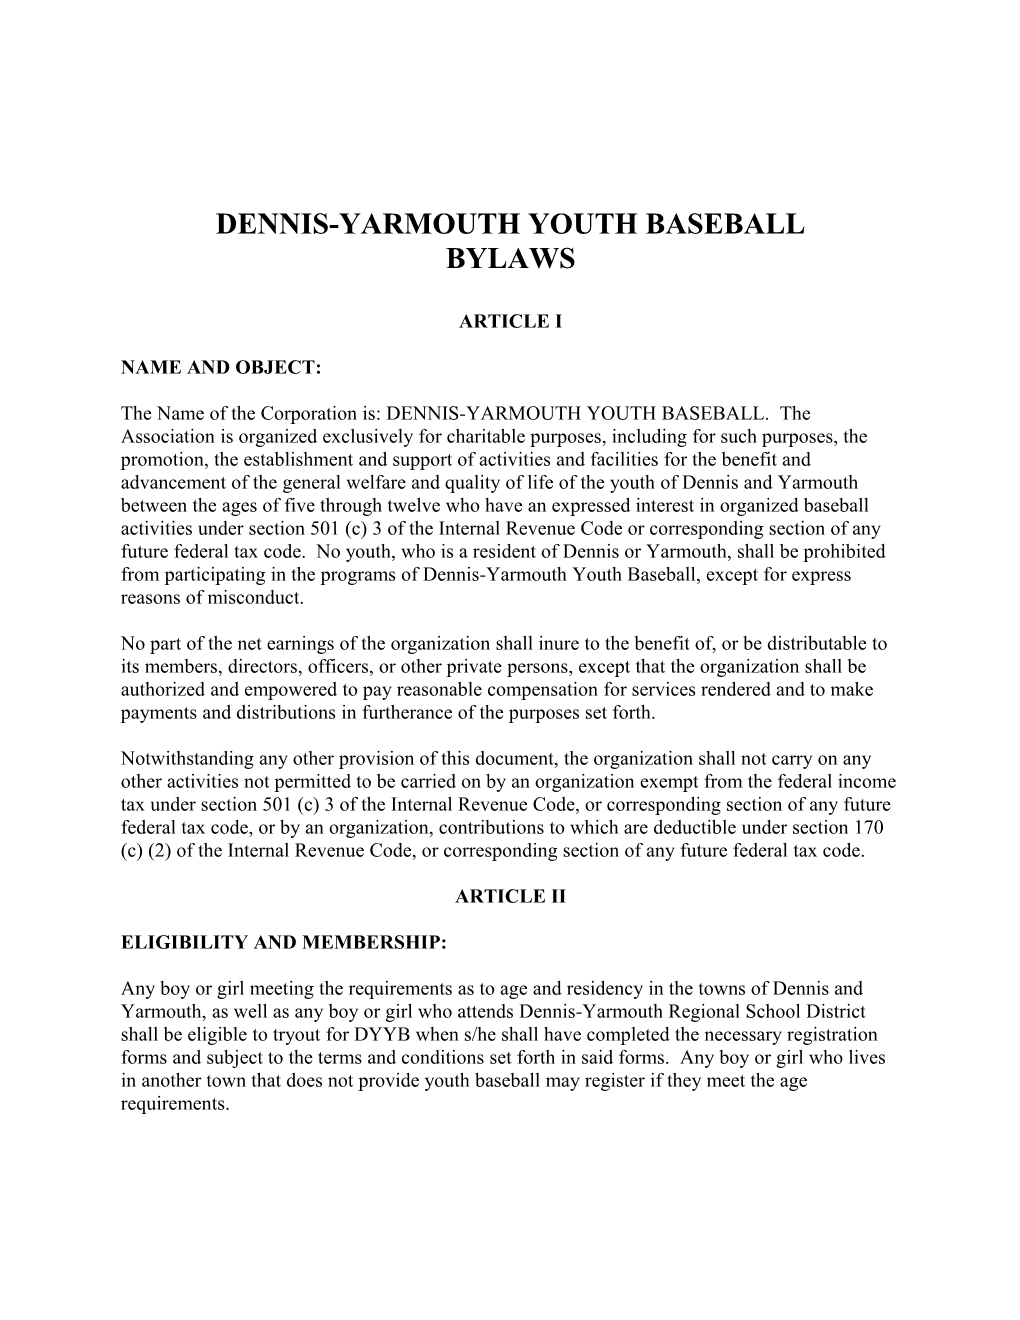 Dennis-Yarmouth Youth Baseball